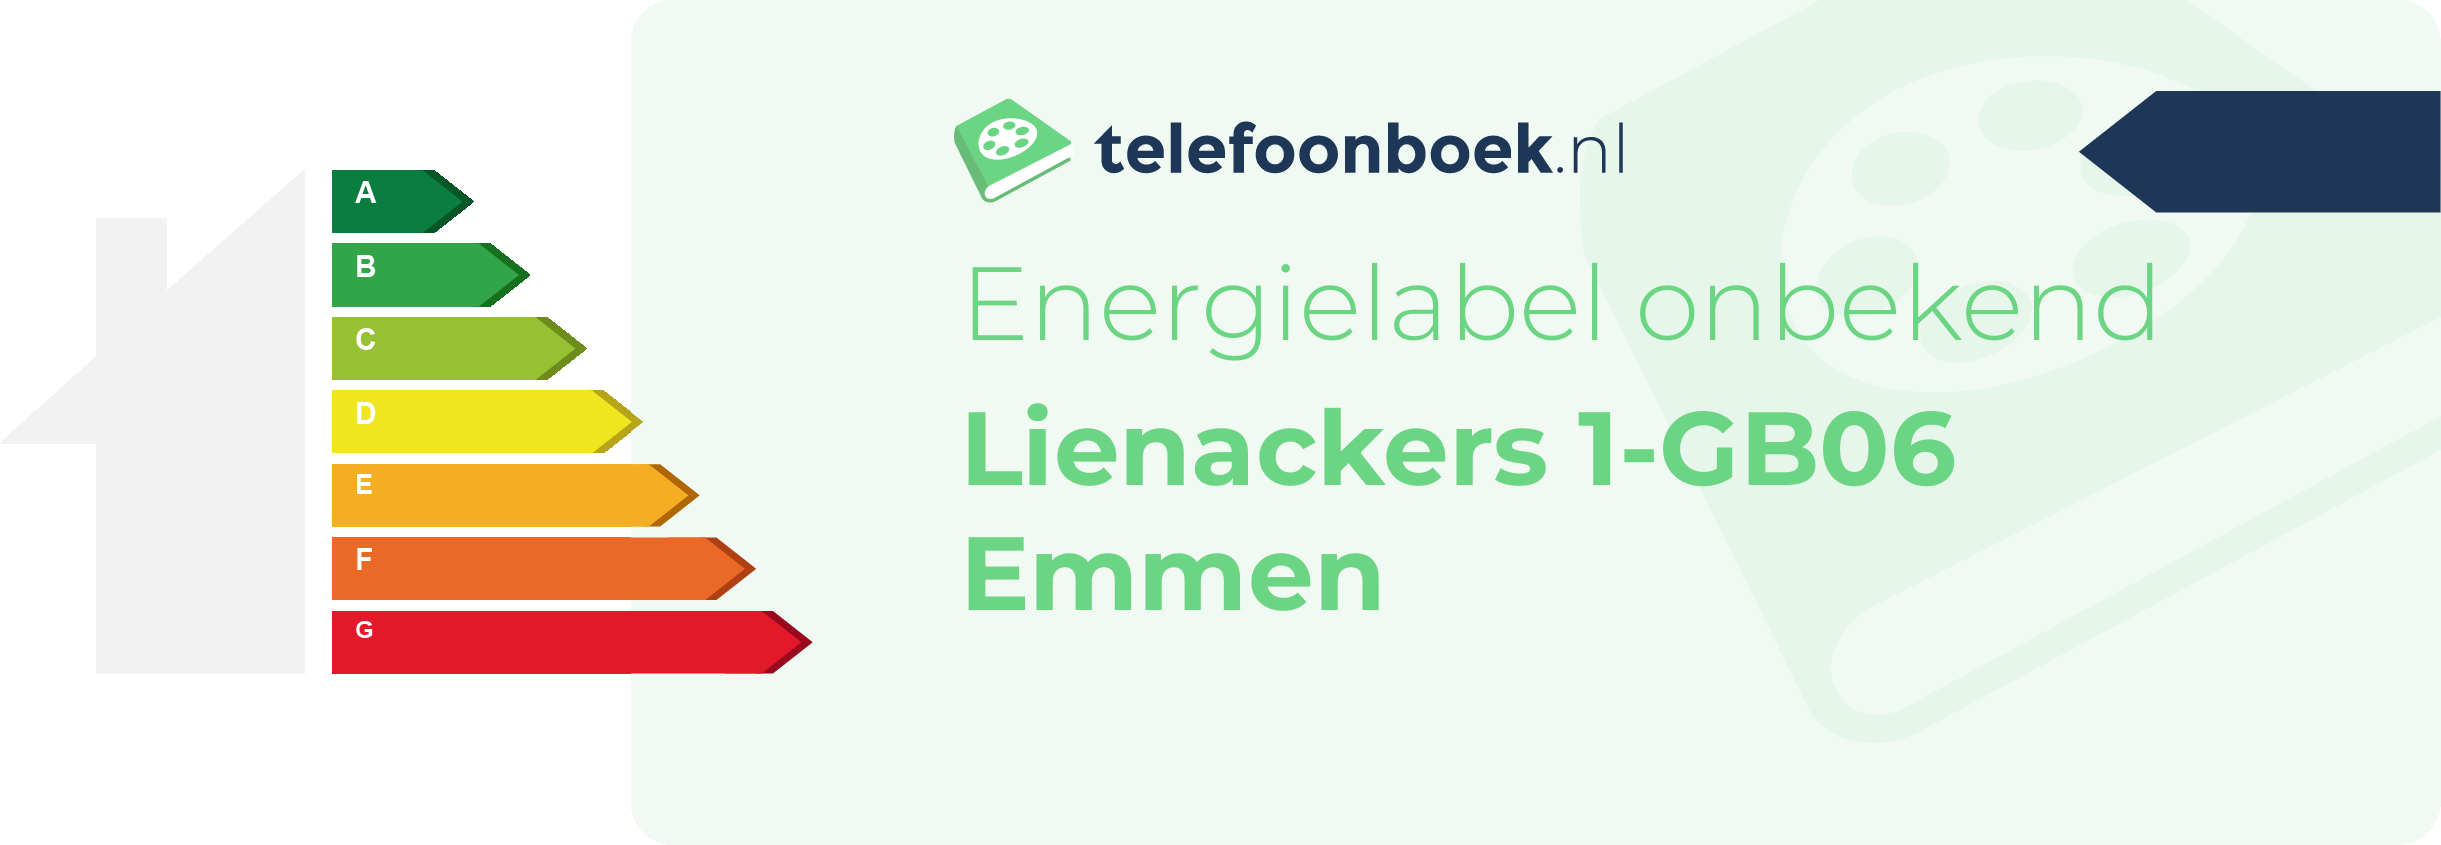 Energielabel Lienackers 1-GB06 Emmen